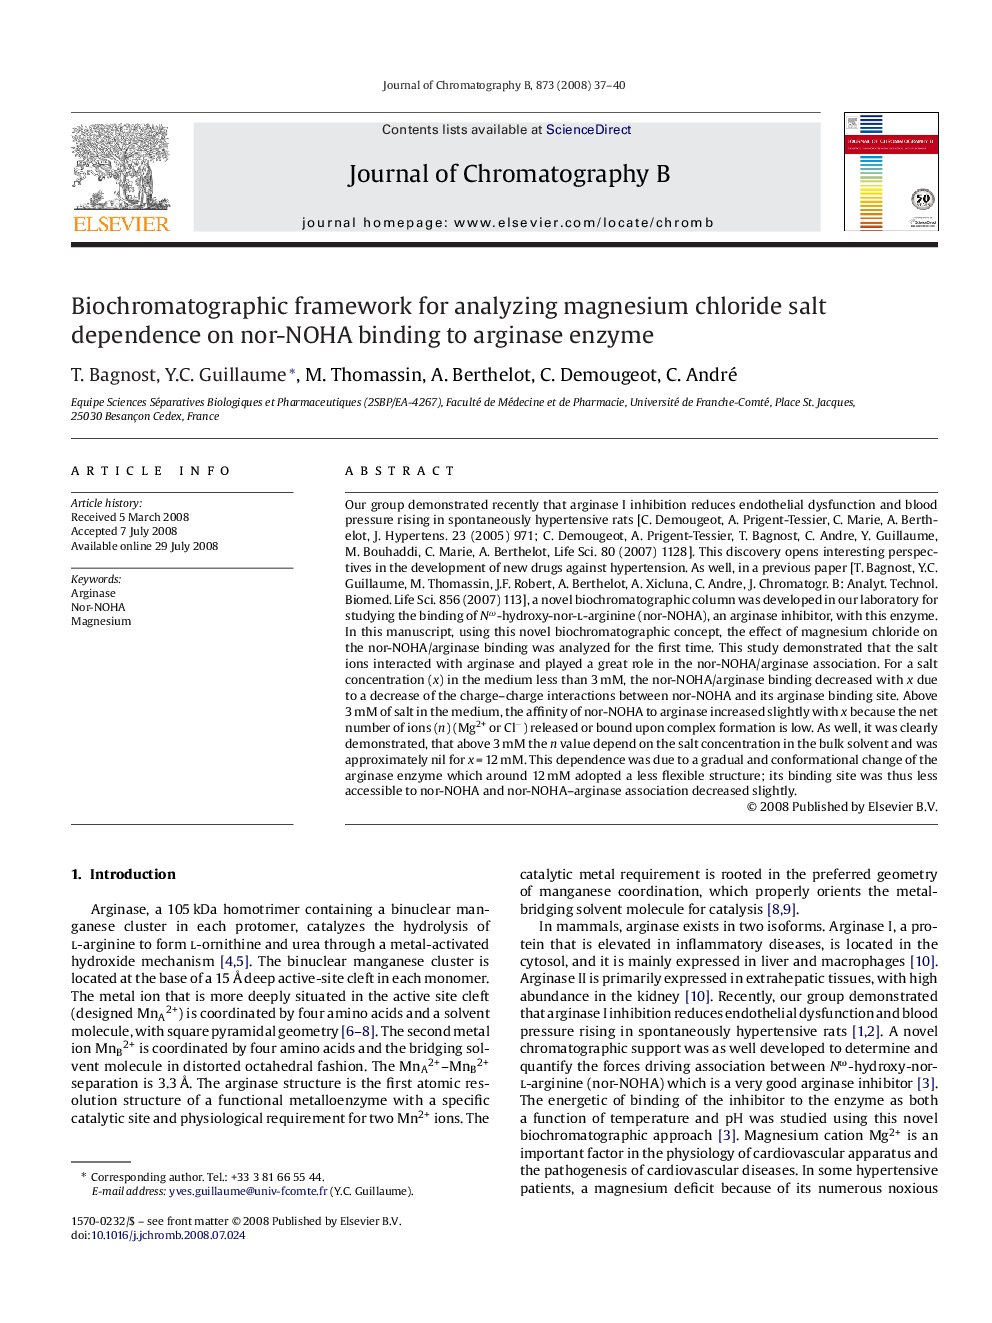 Biochromatographic framework for analyzing magnesium chloride salt dependence on nor-NOHA binding to arginase enzyme